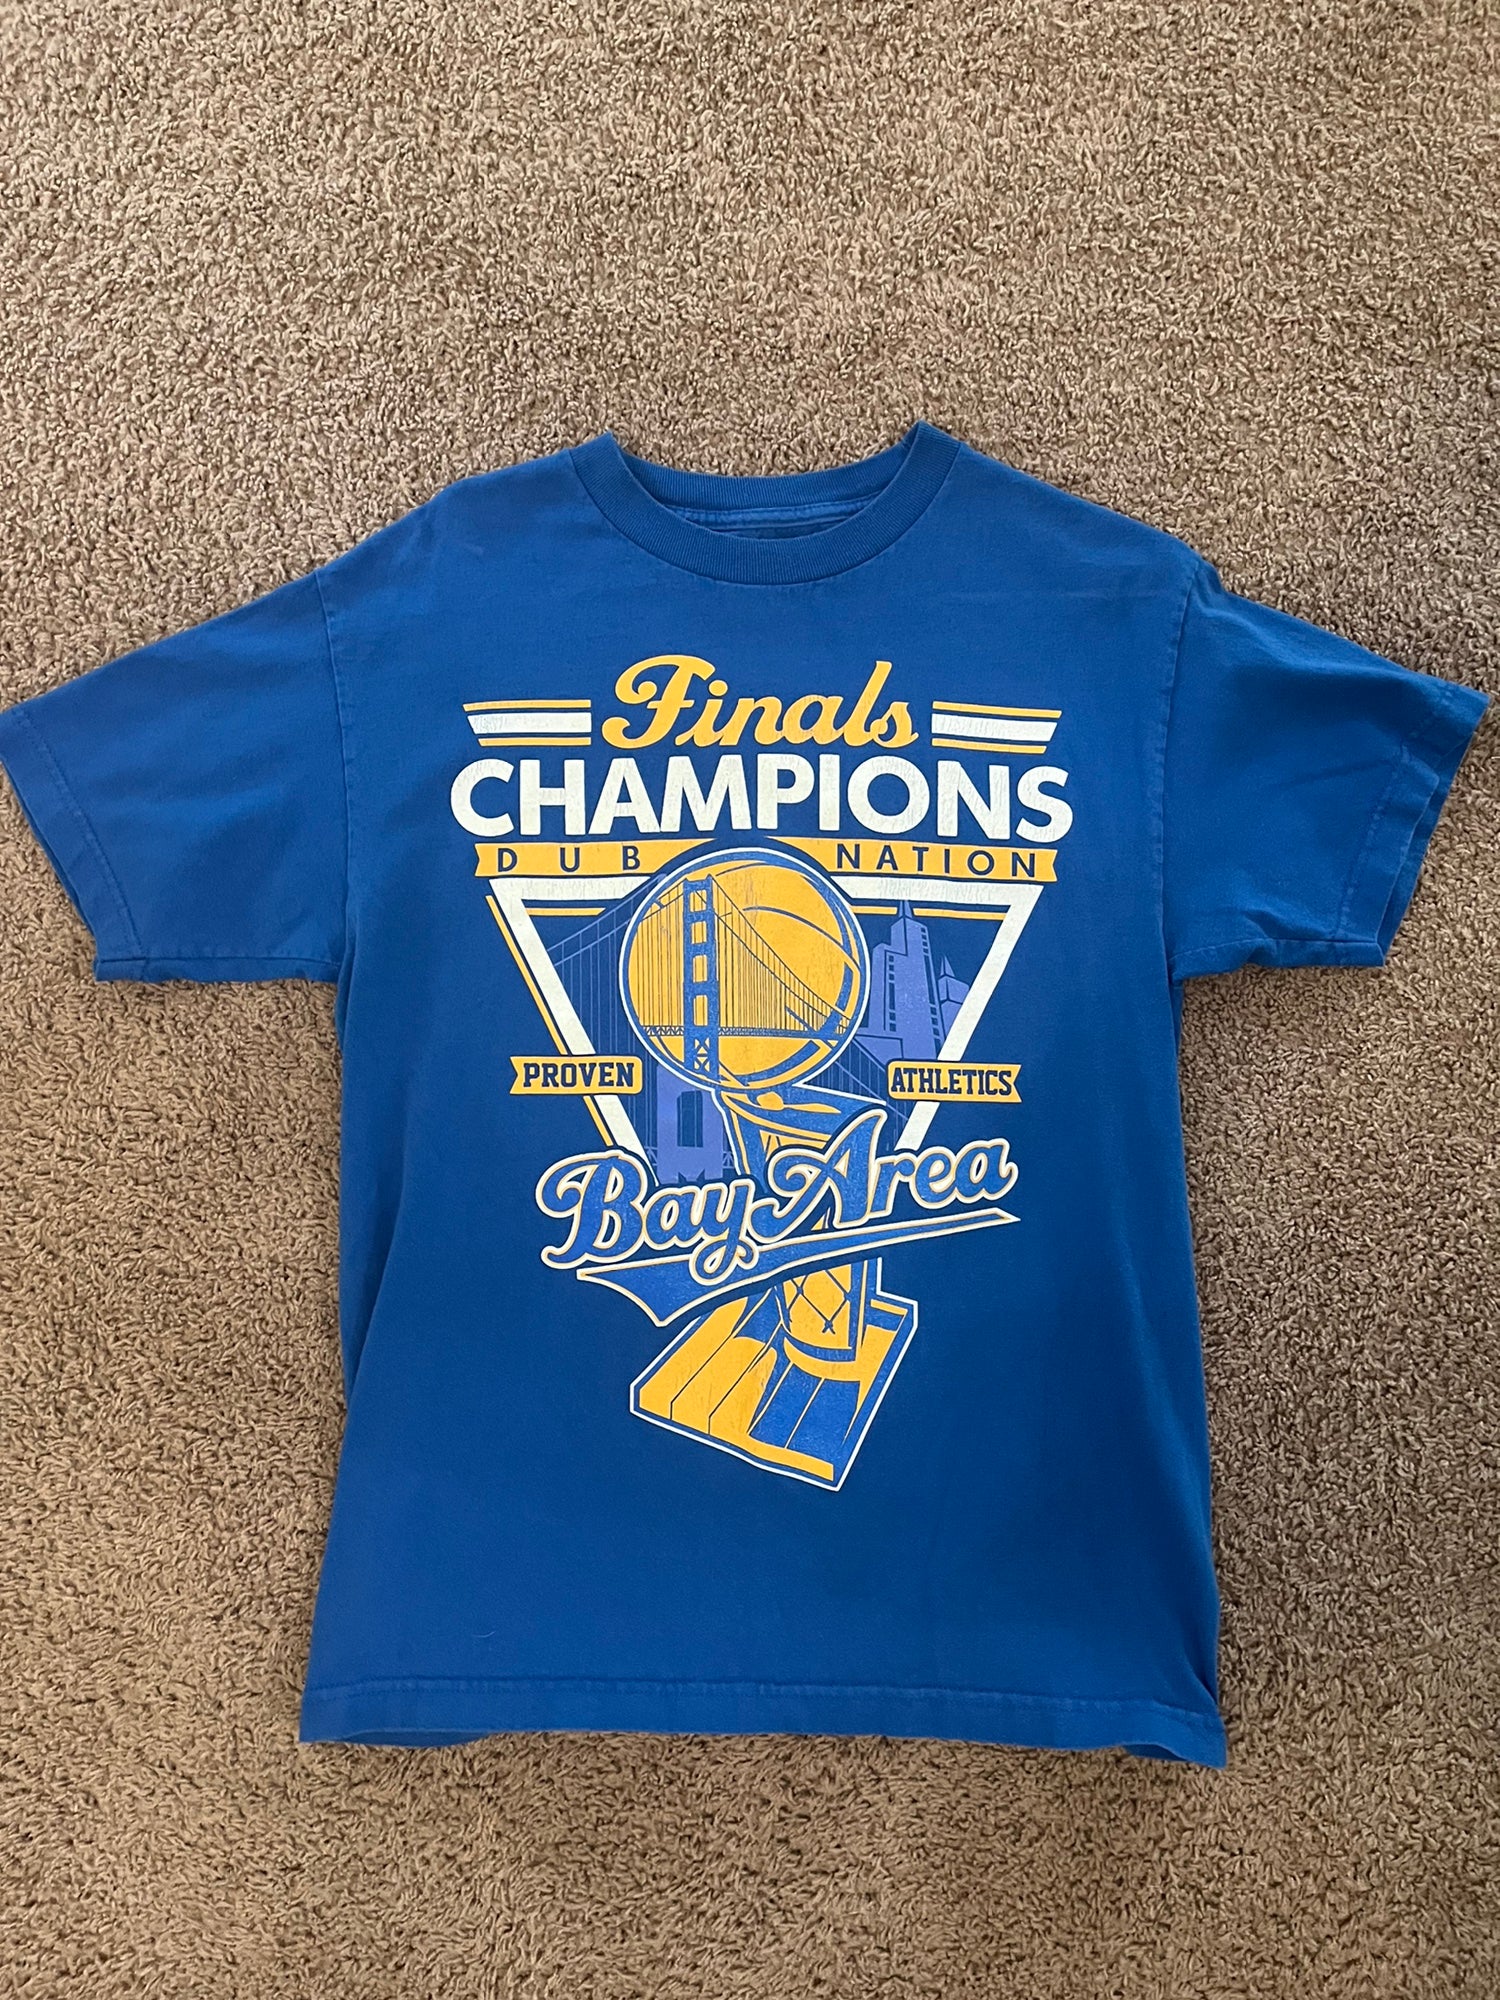 vintage championship shirt